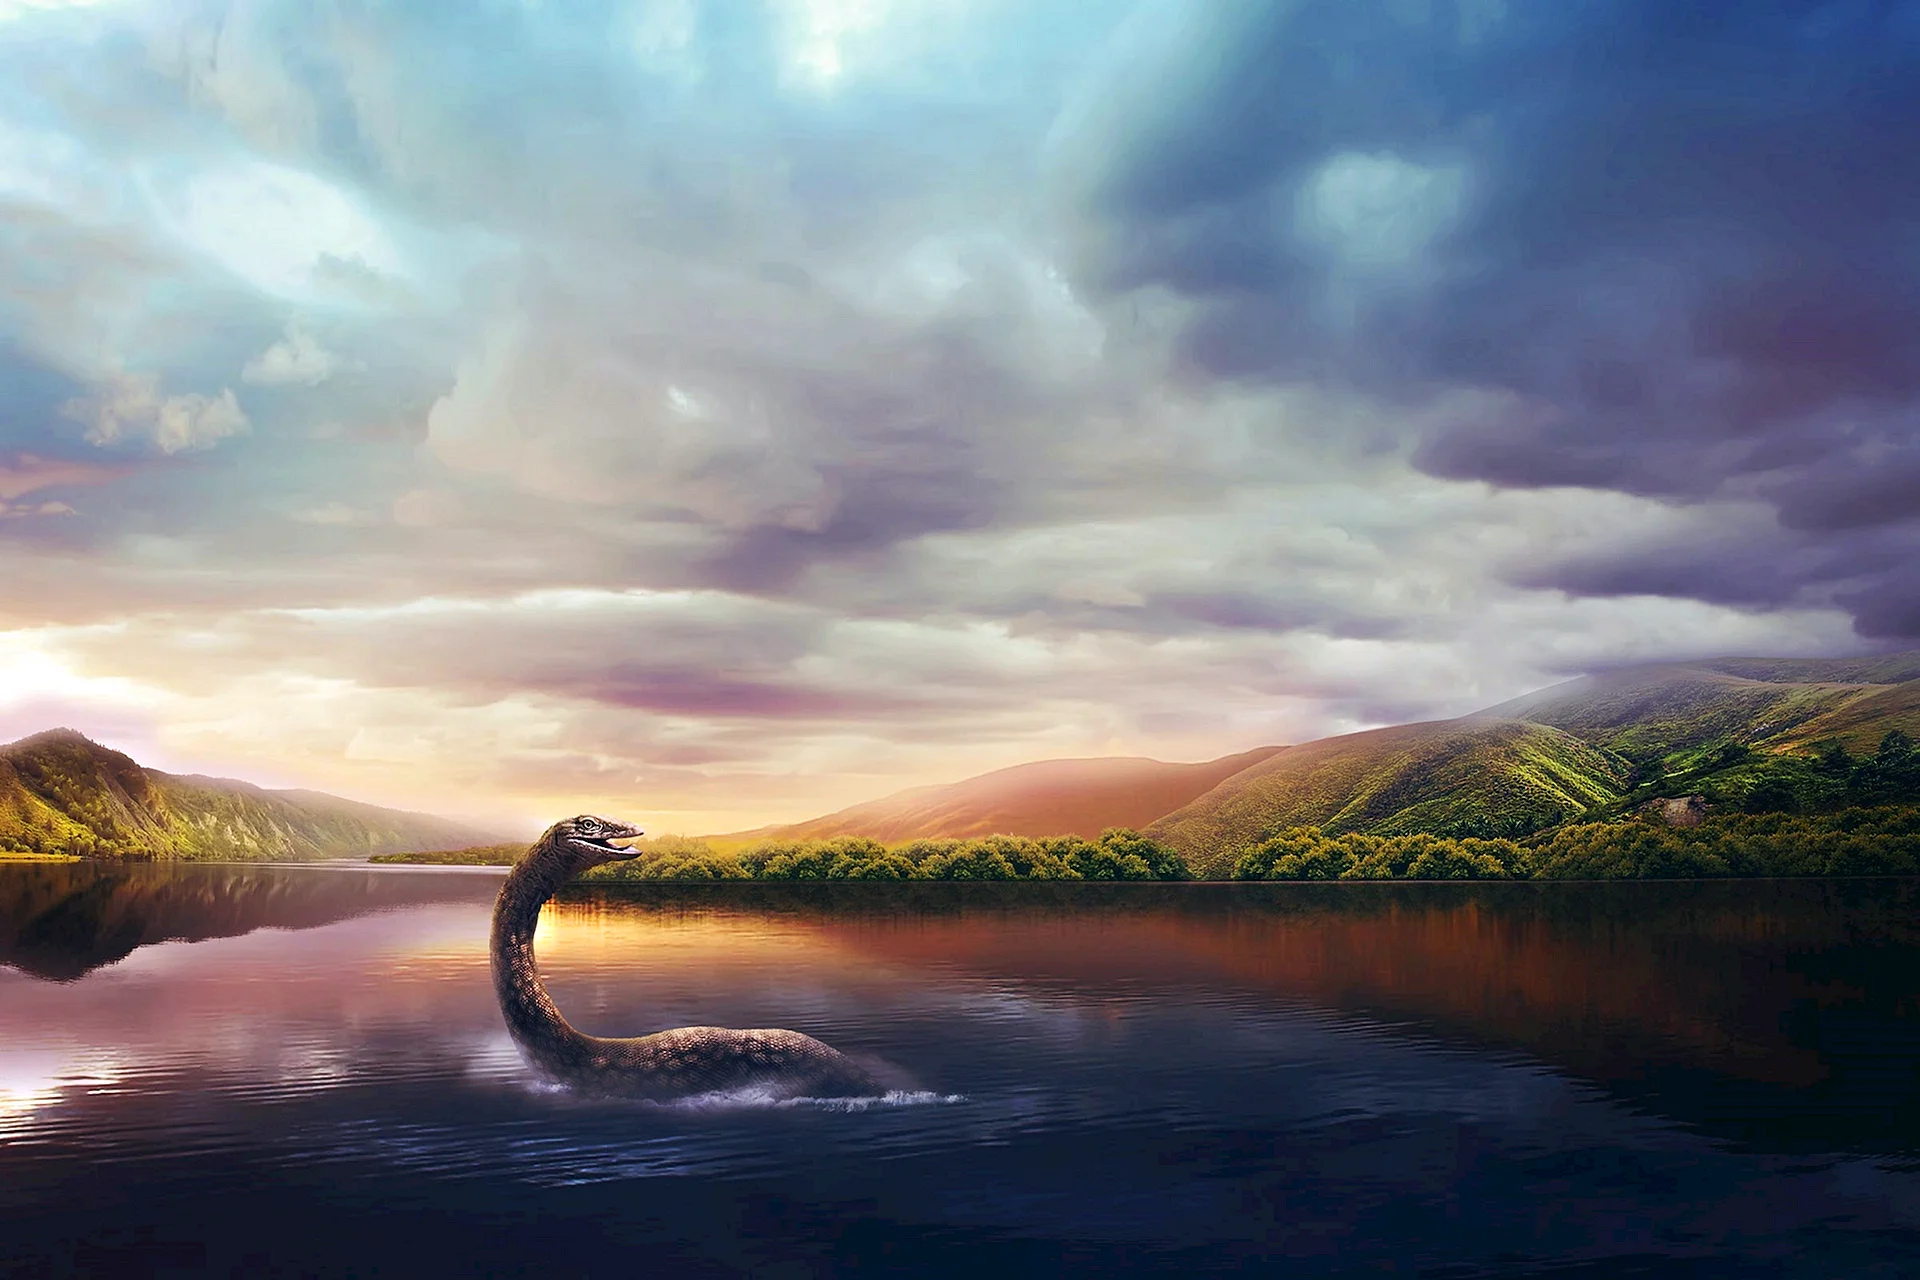 Loch Ness Monster Wallpaper